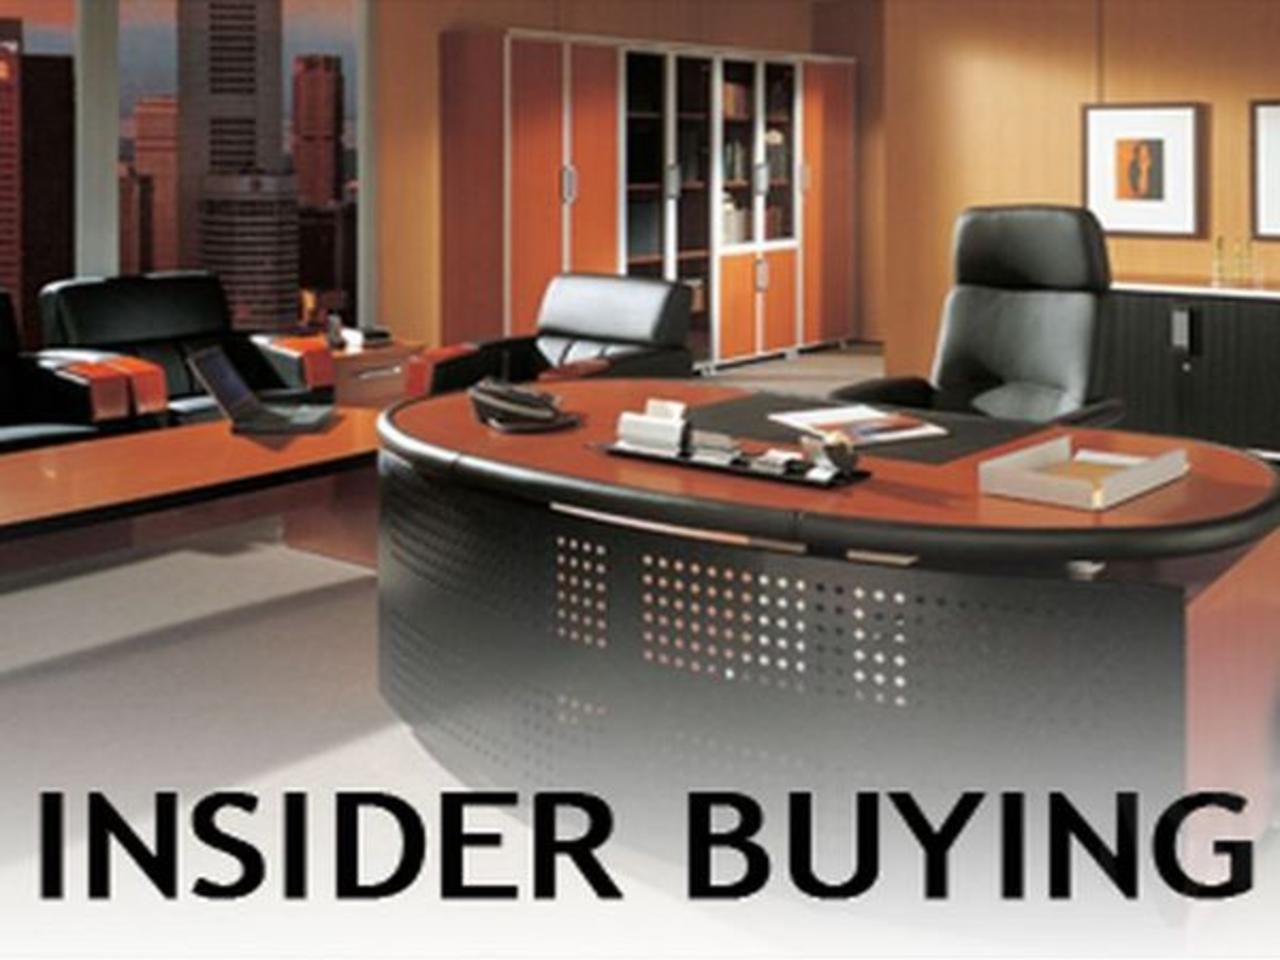 Thursday 10/14 Insider Buying Report: CLST, ASPU